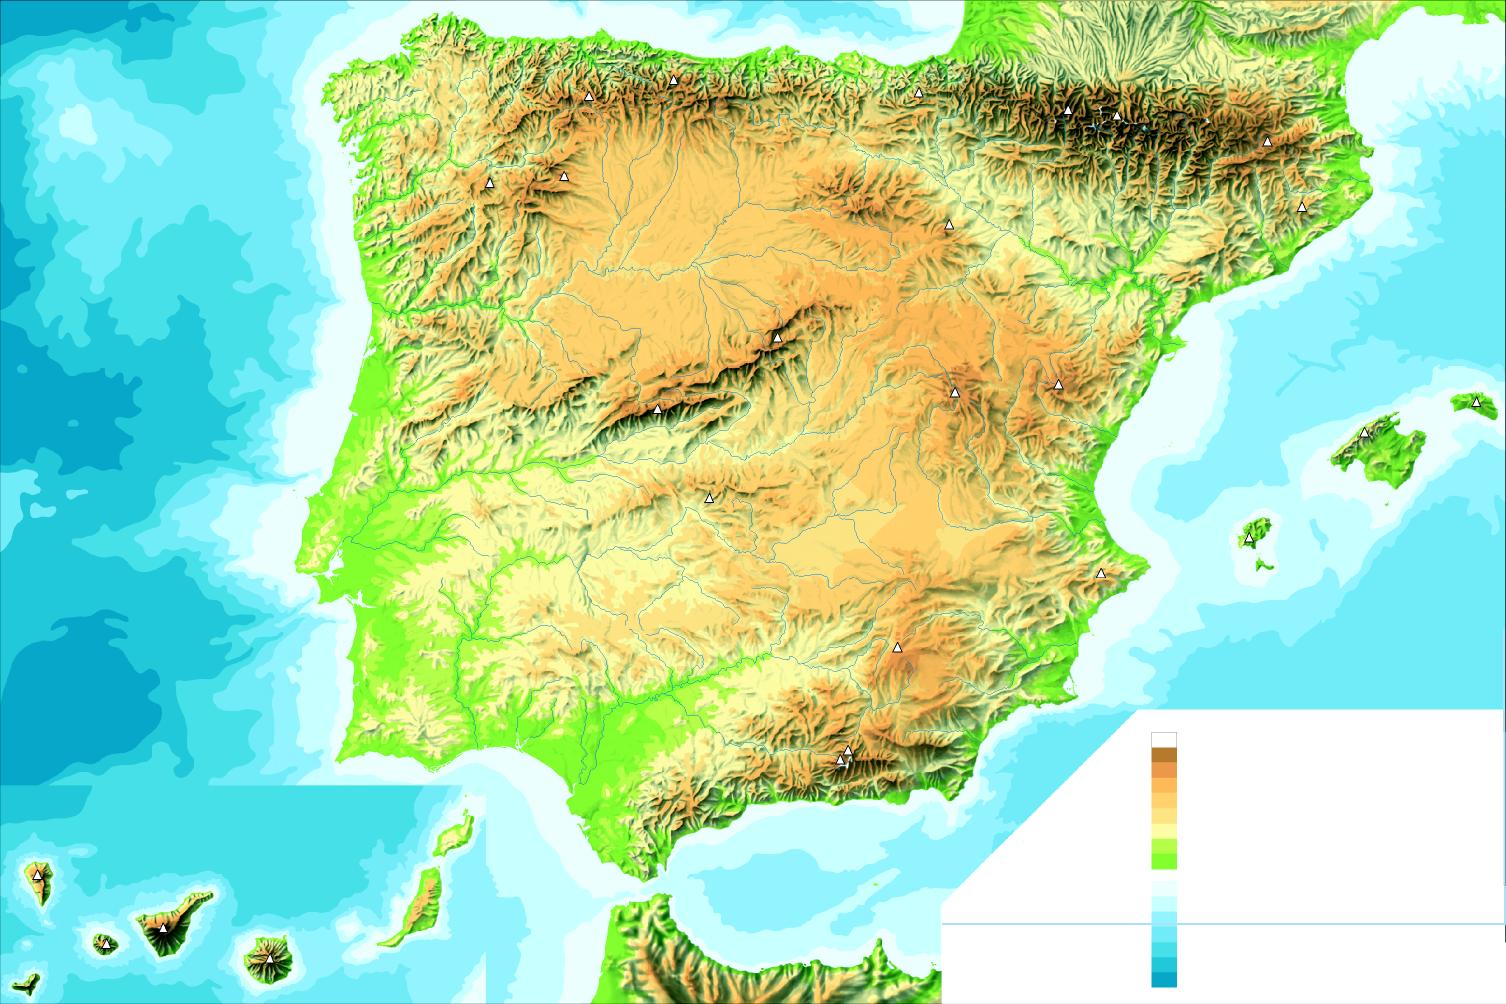 https://blogger.googleusercontent.com/img/b/R29vZ2xl/AVvXsEhVVJBQfyHv_Ec2bcfYRqf8gZ1CDe26HOWORfwzwLmJ2WLNmpEvAPreCKUtuZPZ2fVsAM4iySbGrK1P98azQ3Gh0zslRFaCXgCXuvF92LTBbdDNcneUSpVeGMm91zAZvNVynHV03zGNAg1H/s1600/Mapa-fisico-de-Espana-mudo-4092.jpeg